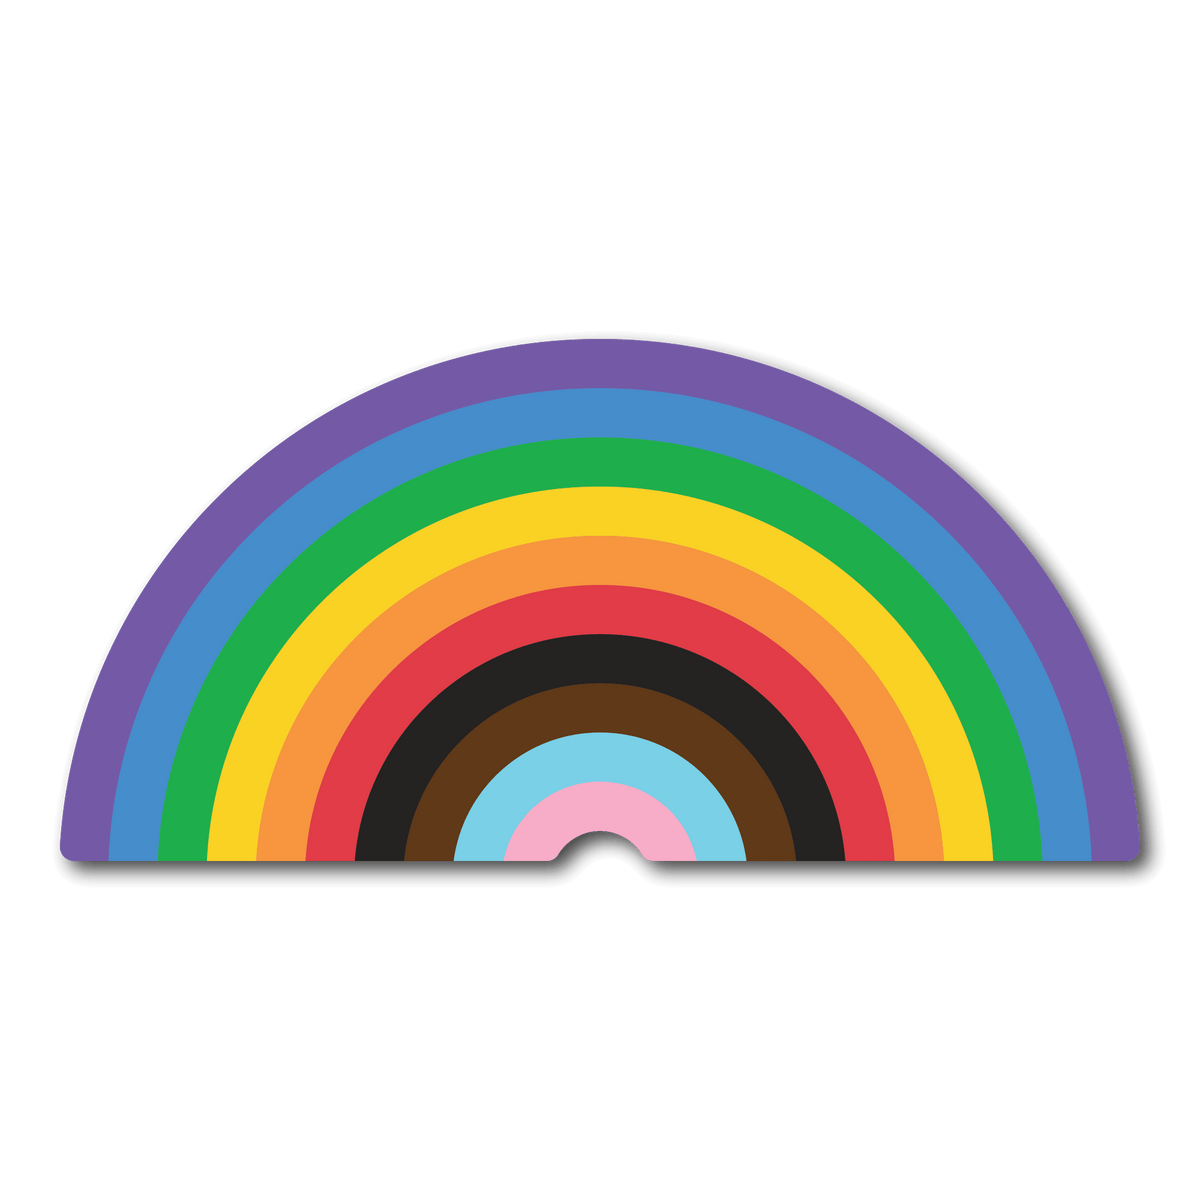 Mini Rainbow Sticker